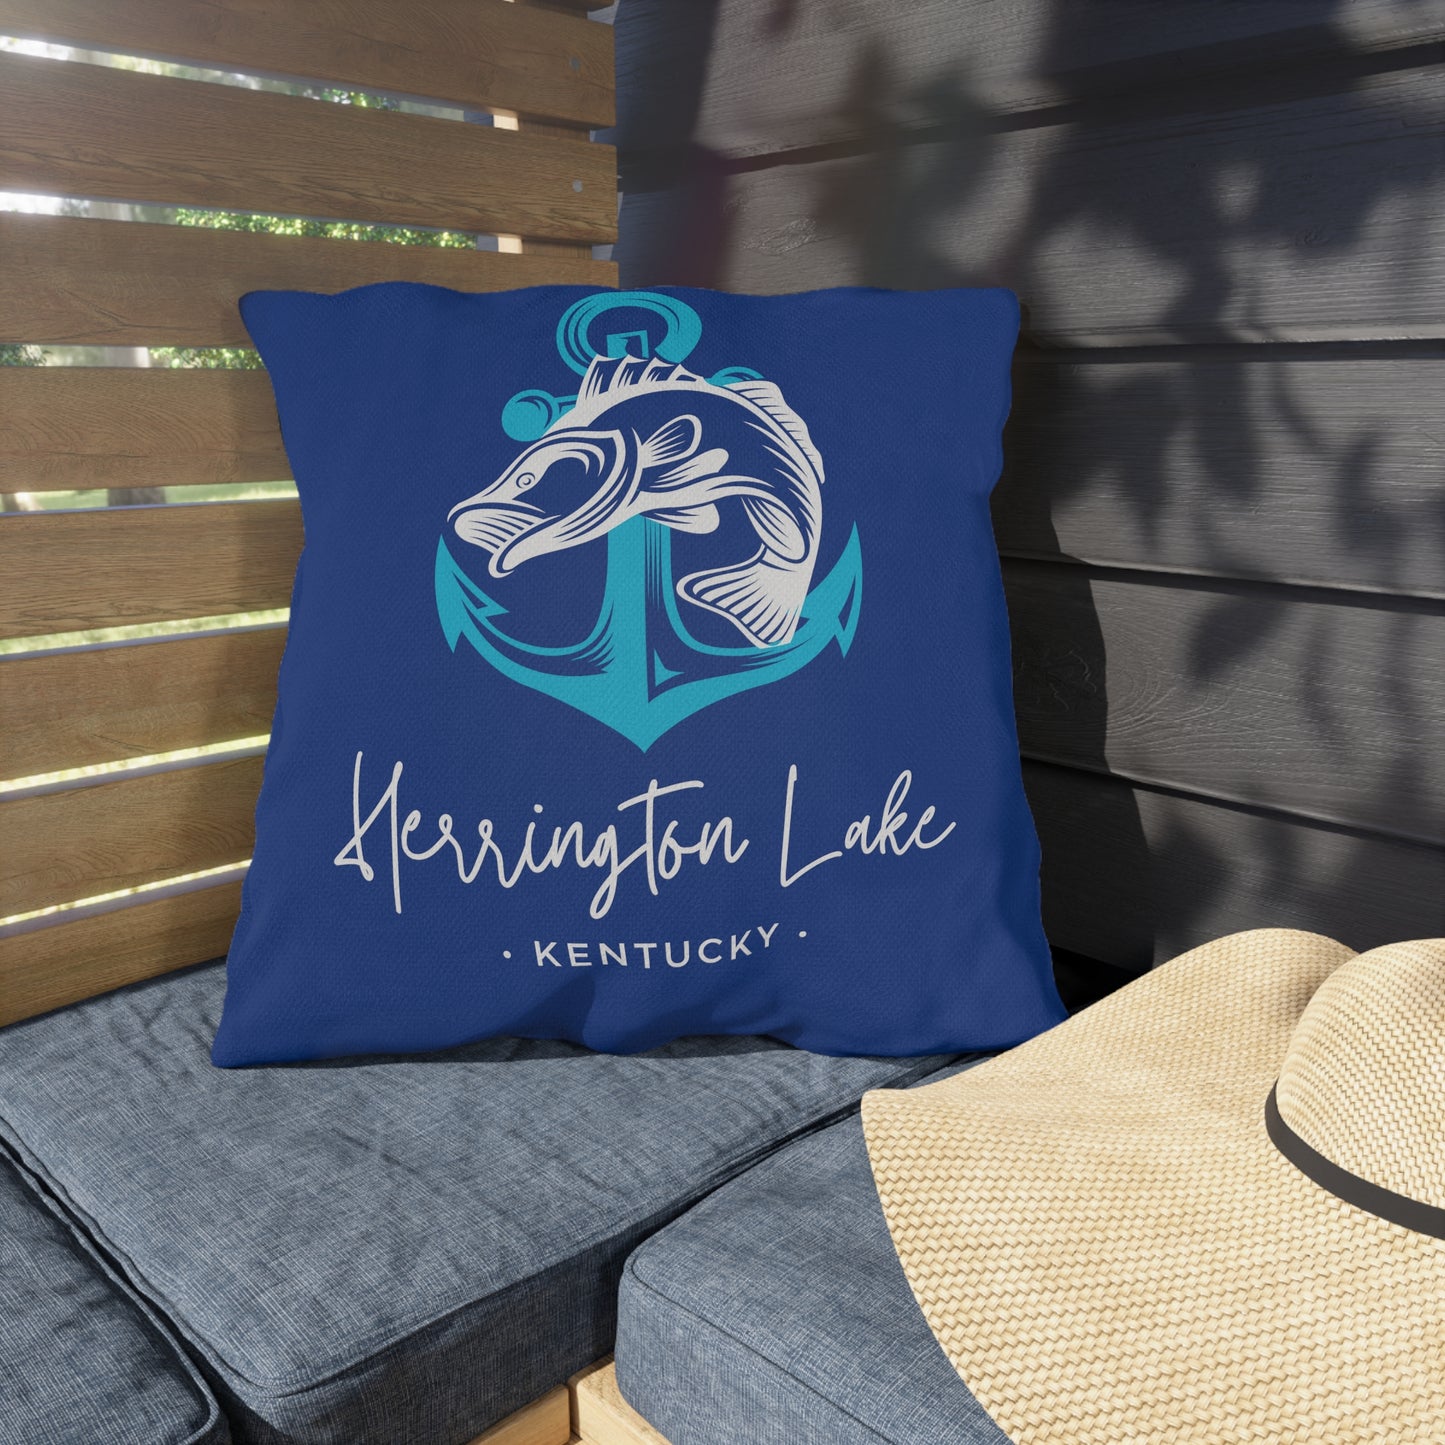 Herrington Lake "Nautical Catch" Outdoor Pillows in Blue